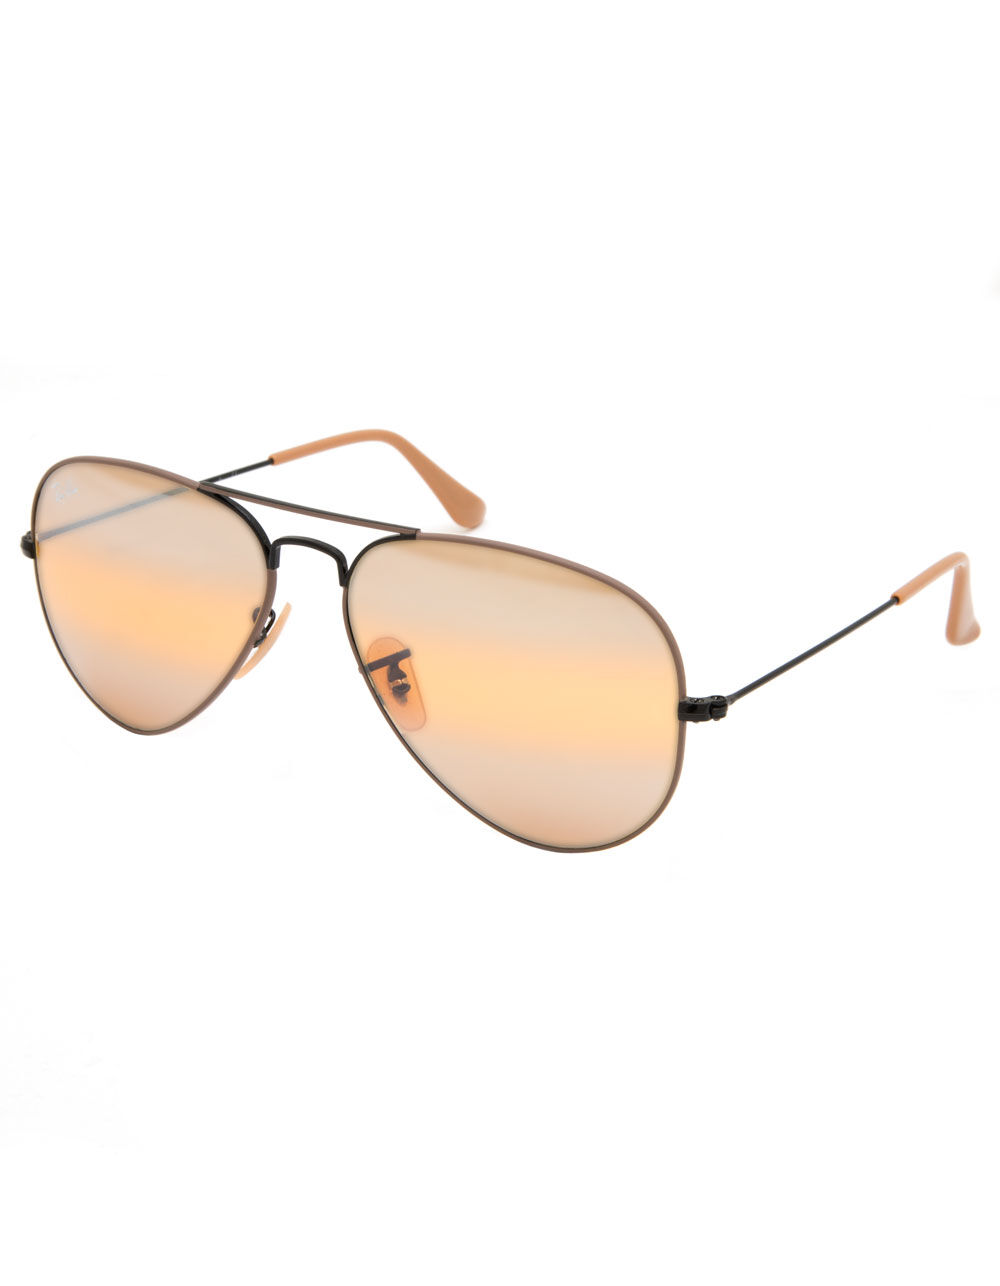 Ray Ban Aviator Mirror Light Brown Polarized Sunglasses Shefinds